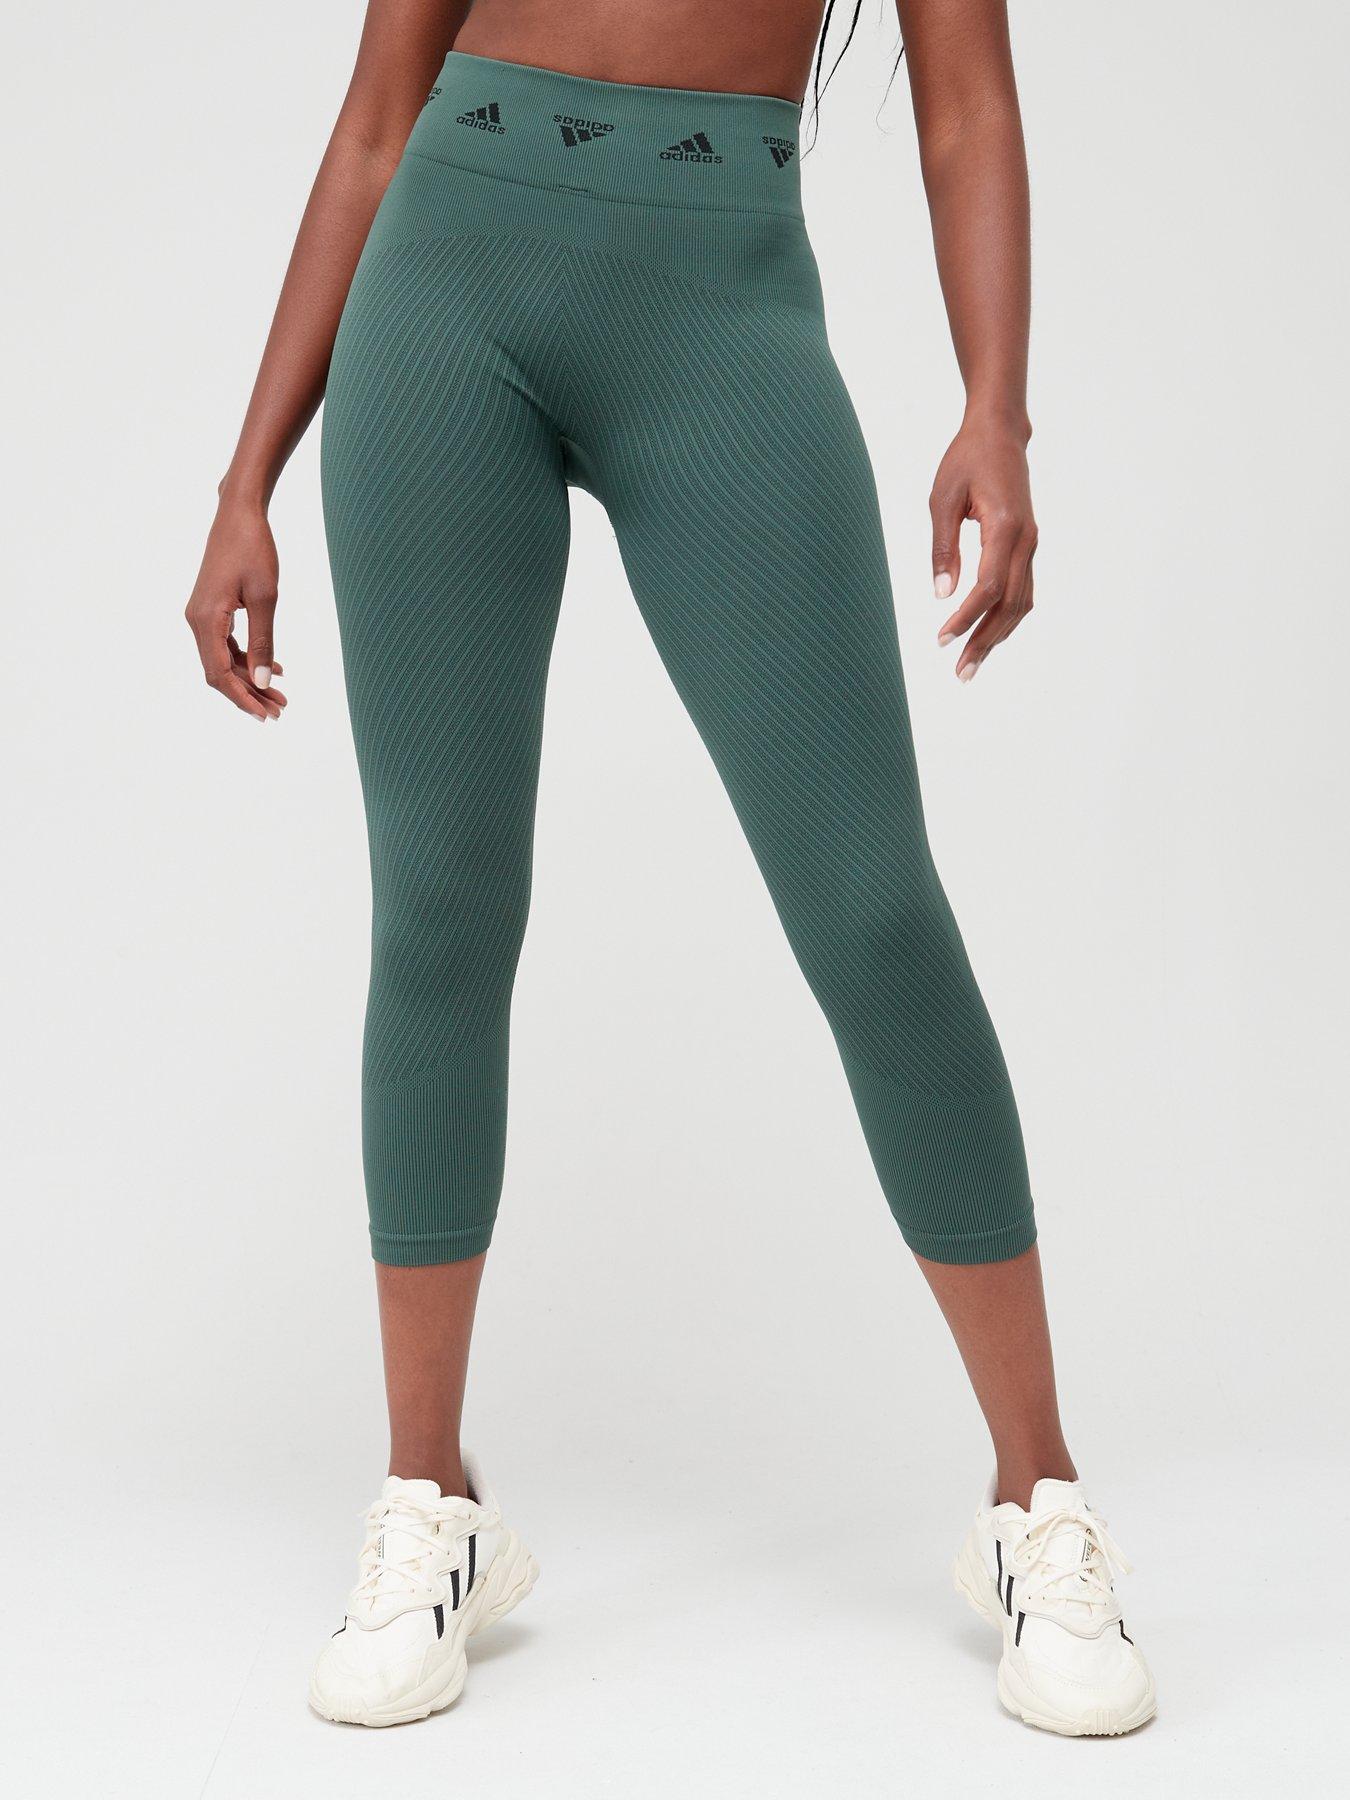 Capri Yoga Pants Leggings Details about   Women's Extra Soft Cute Capri Leggings with Design 